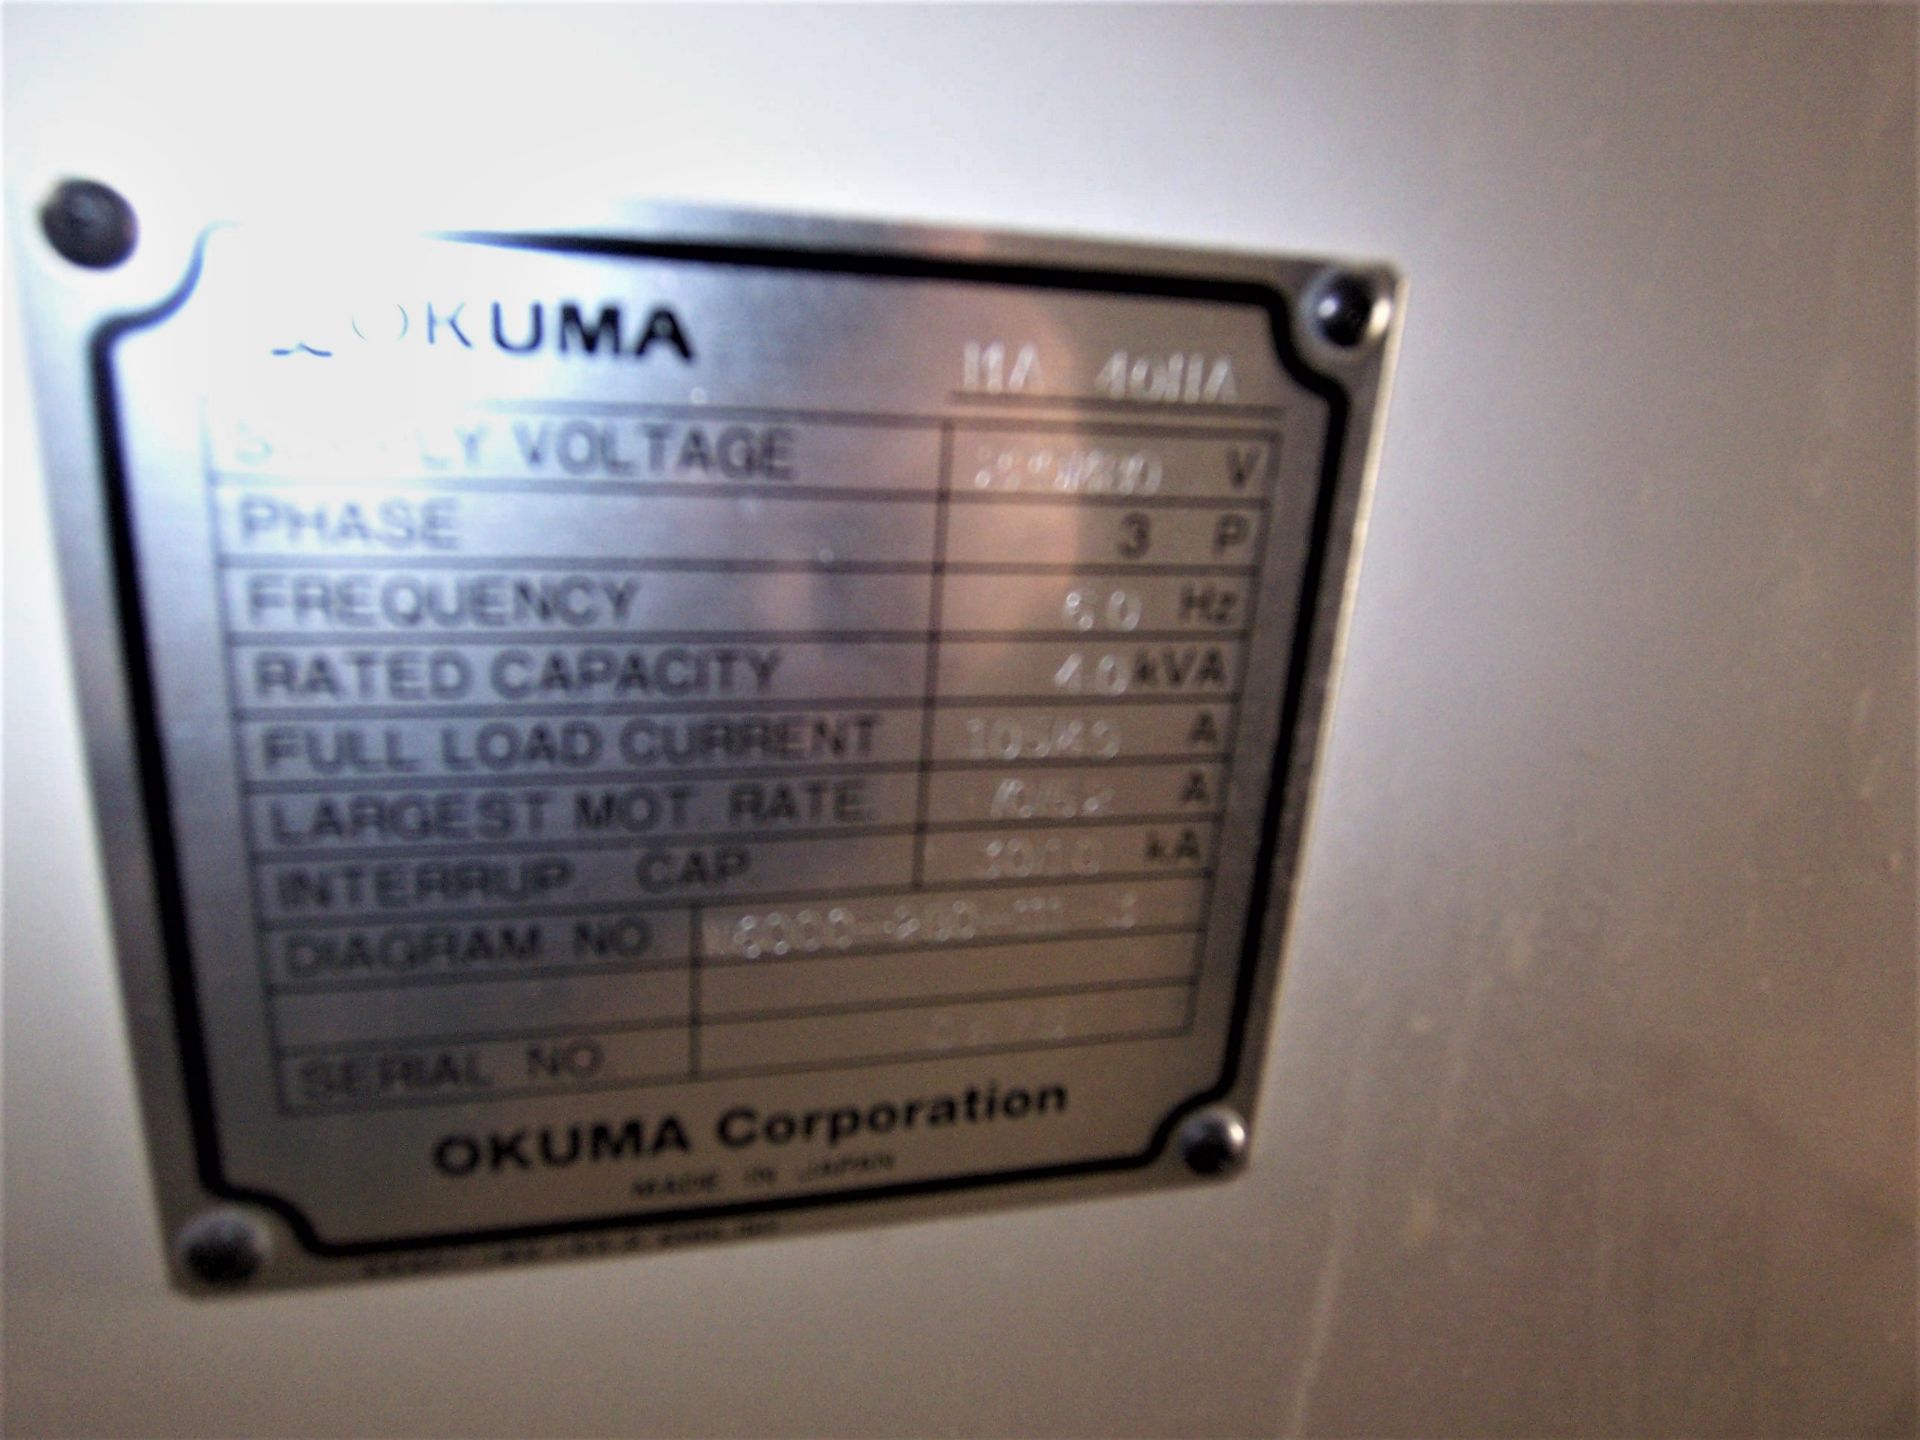 OKUMA MDL. MA-40HA HORIZONTAL DUAL PALLET CNC HORIZONTAL MACHINING CENTER WITH 15-3/4" X 15-3/4" - Image 6 of 7